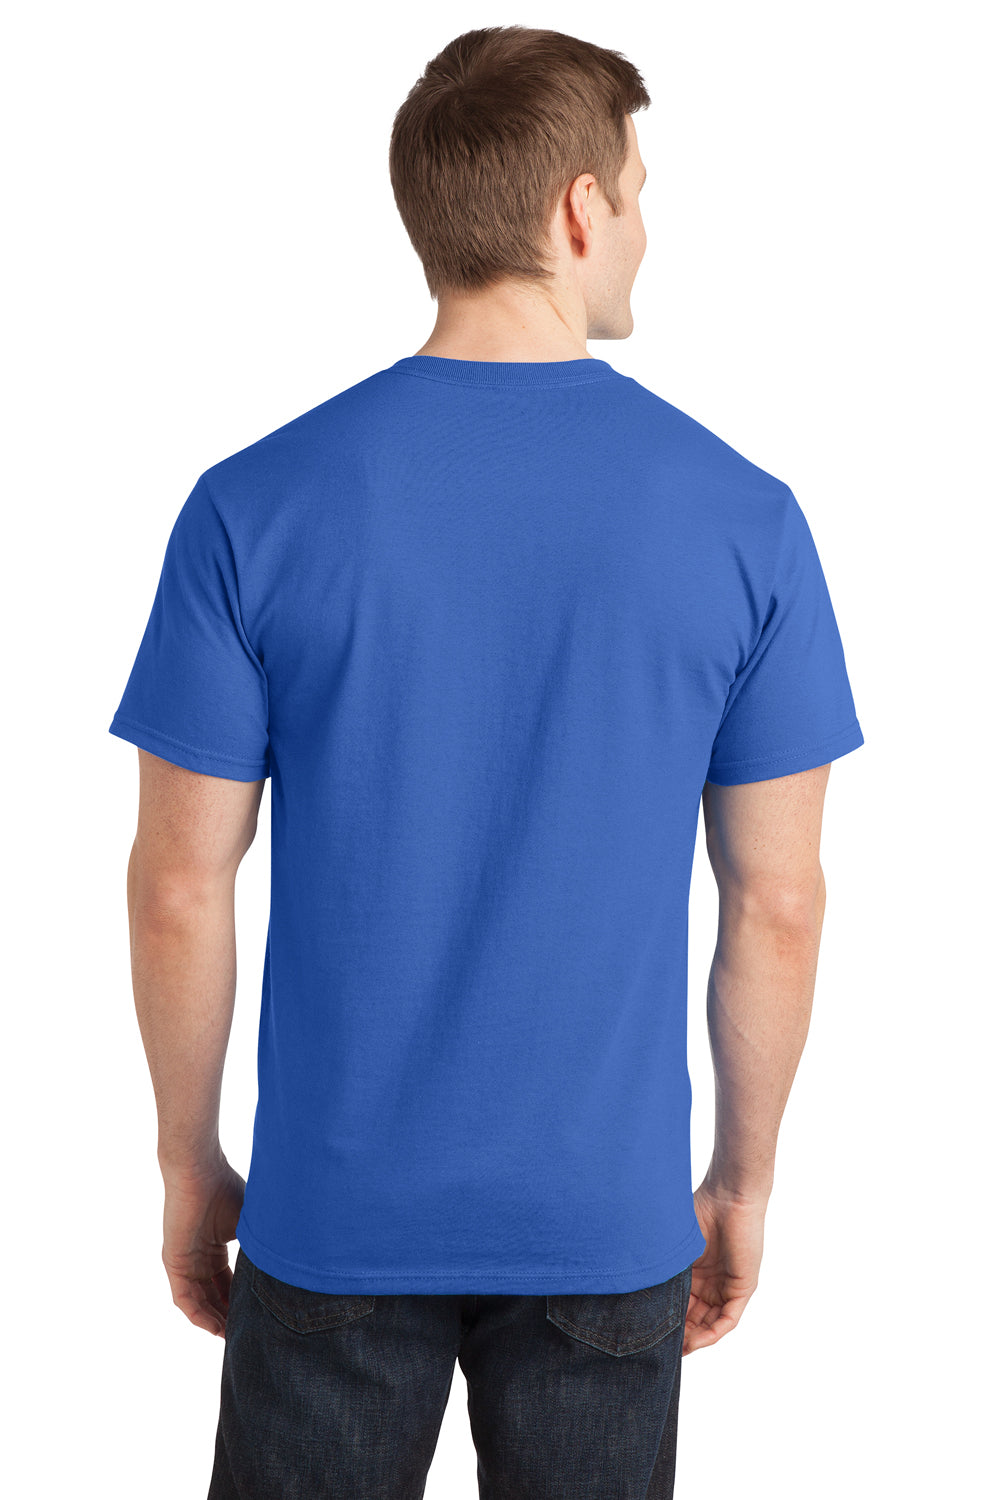 Port & Company PC150 Mens Short Sleeve Crewneck T-Shirt Royal Blue Back